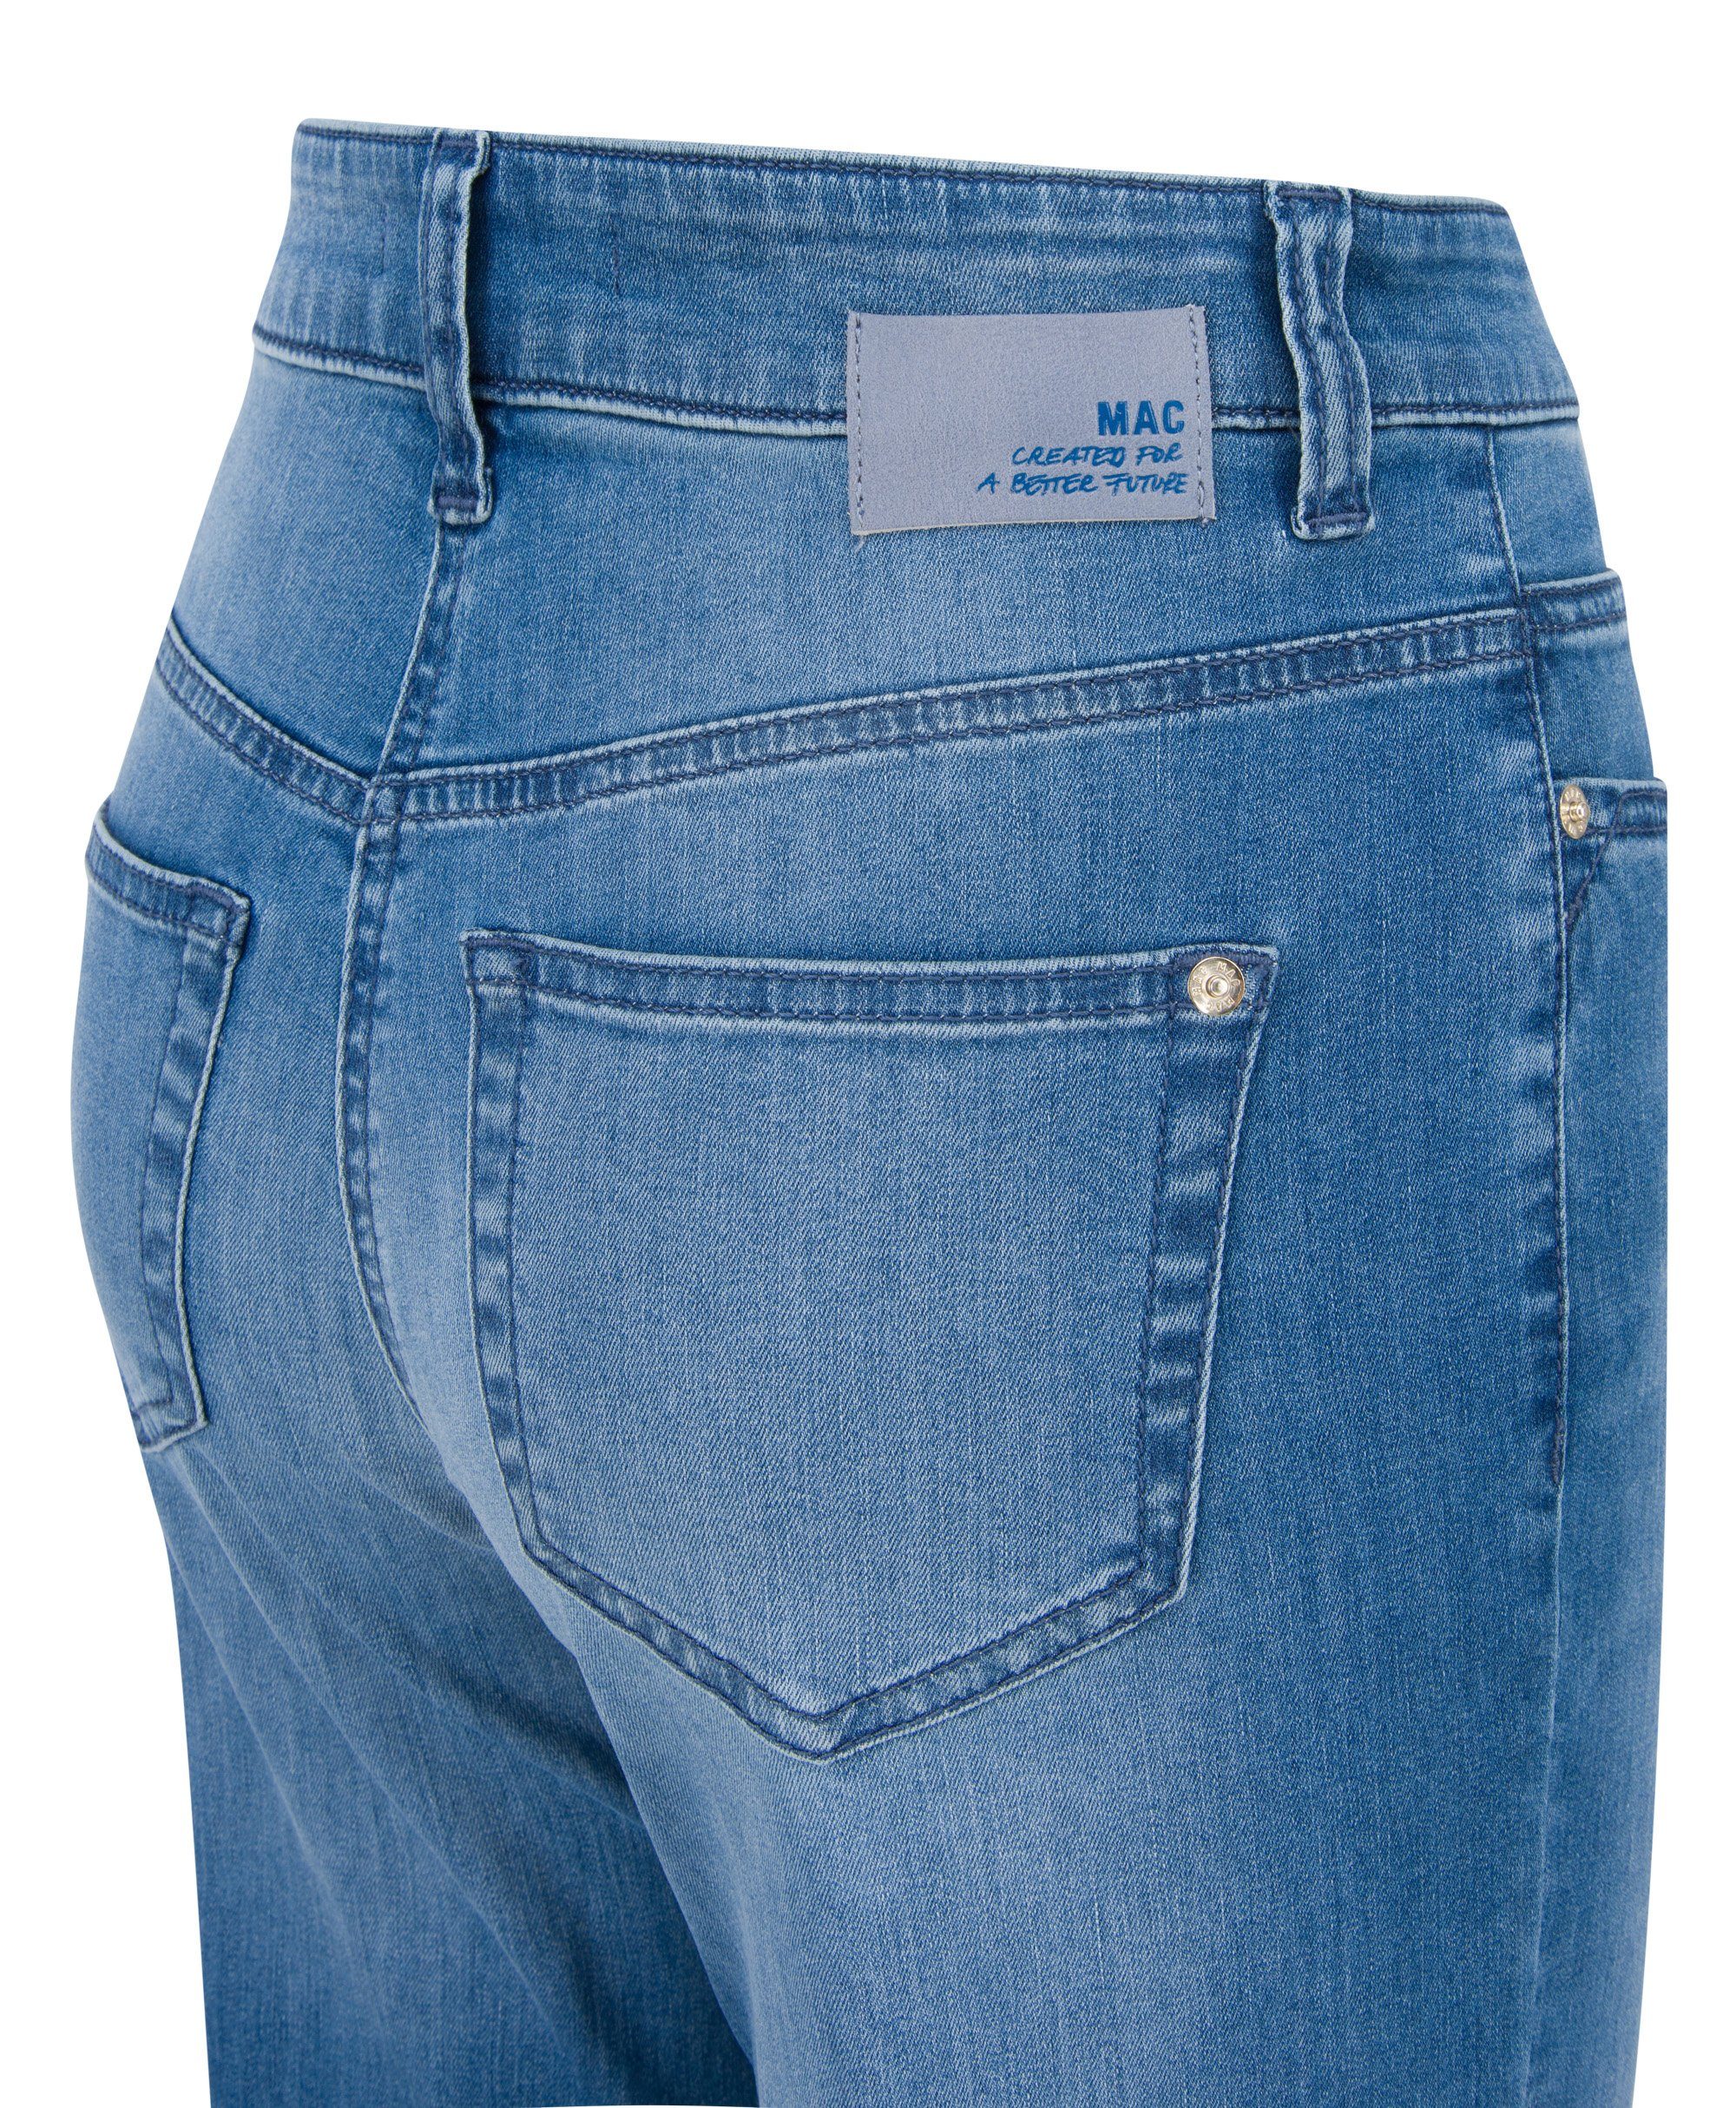 MAC Stretch-Jeans MAC STELLA mid wash D546 main blue 5100-90-0380